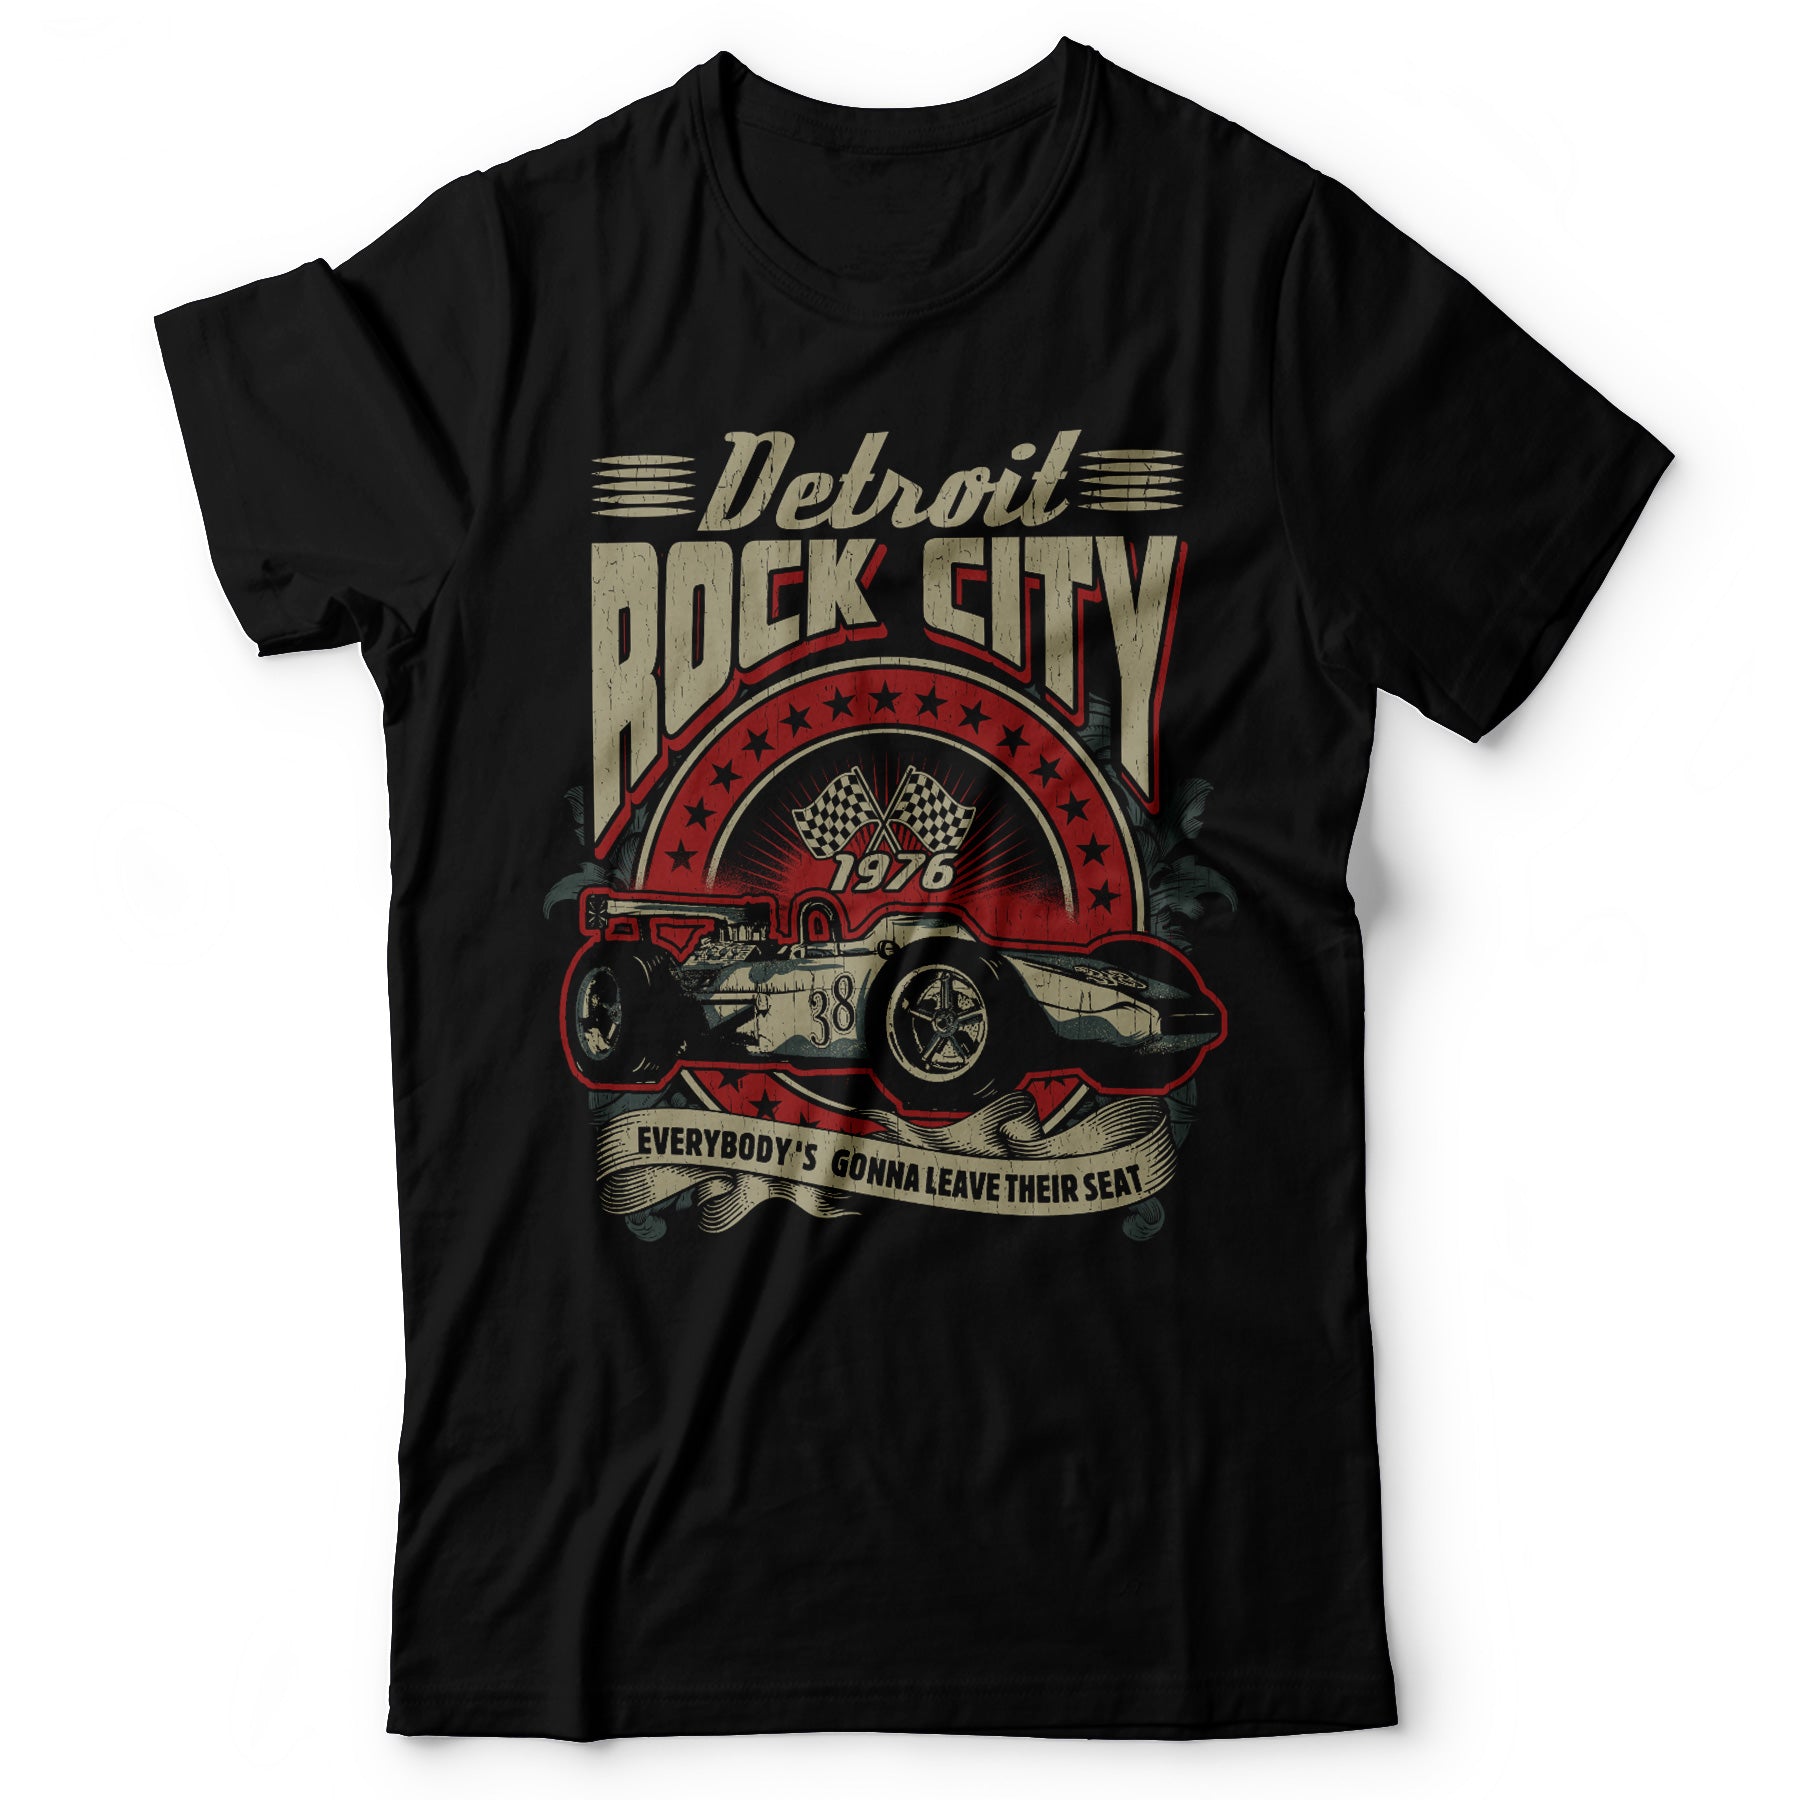 KISS - Detroit Rock City - Men's T-shirt Black